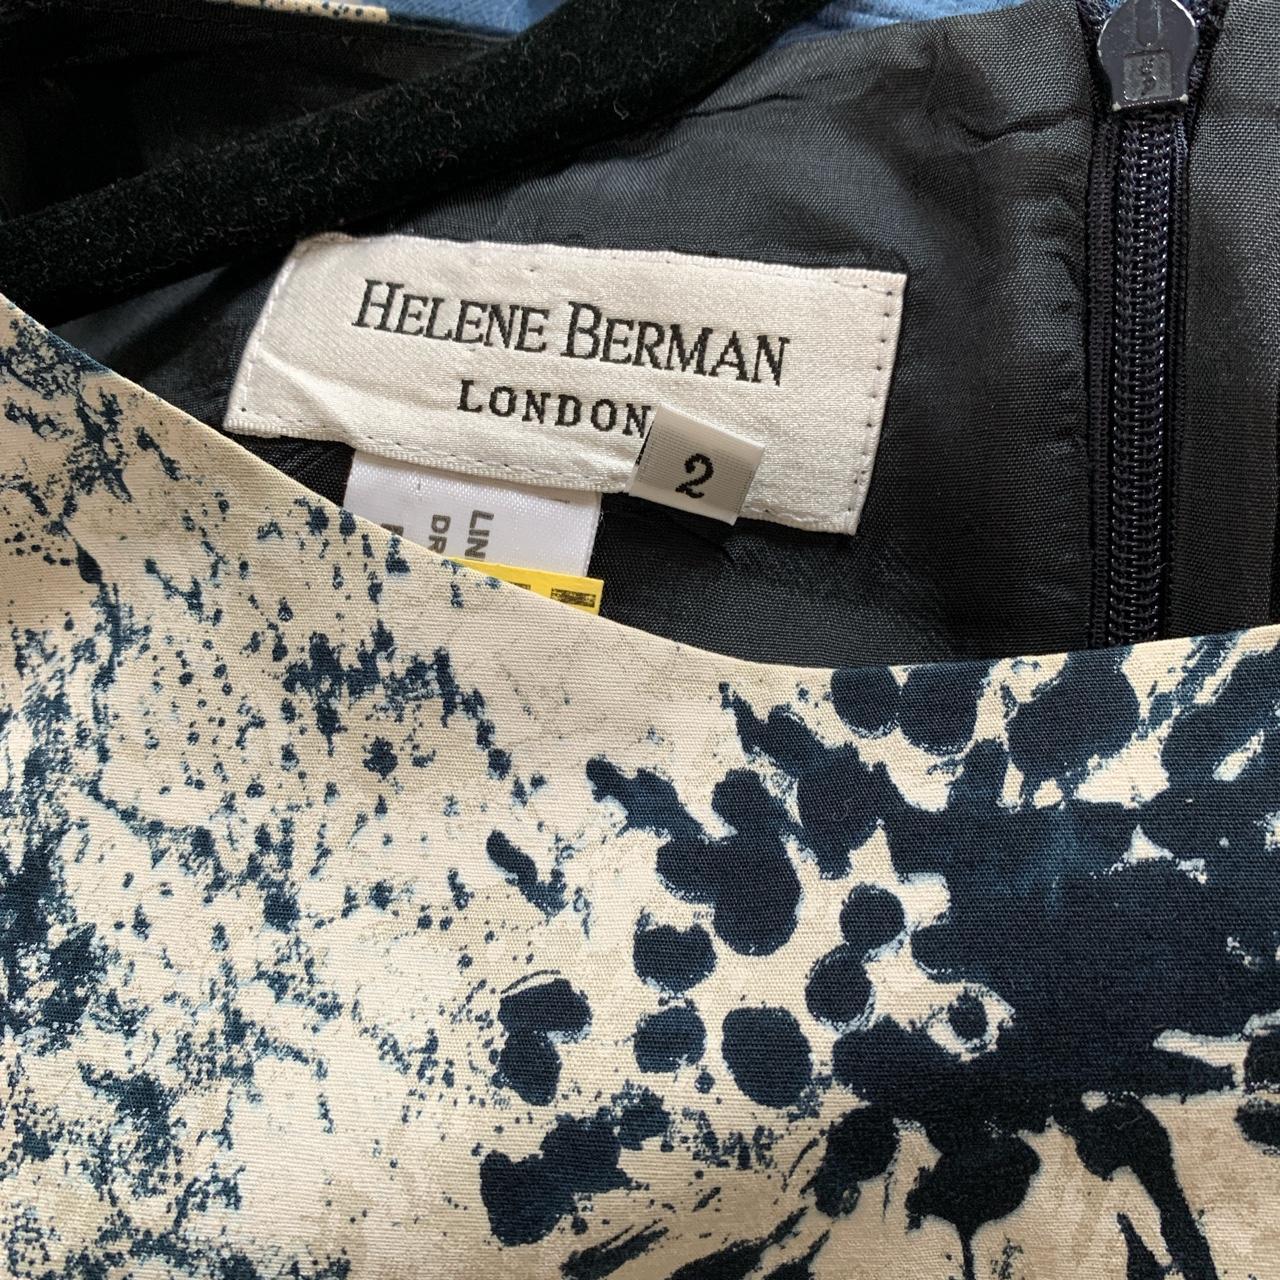 Product Image 3 - Exquisite Helene Berman London sheath